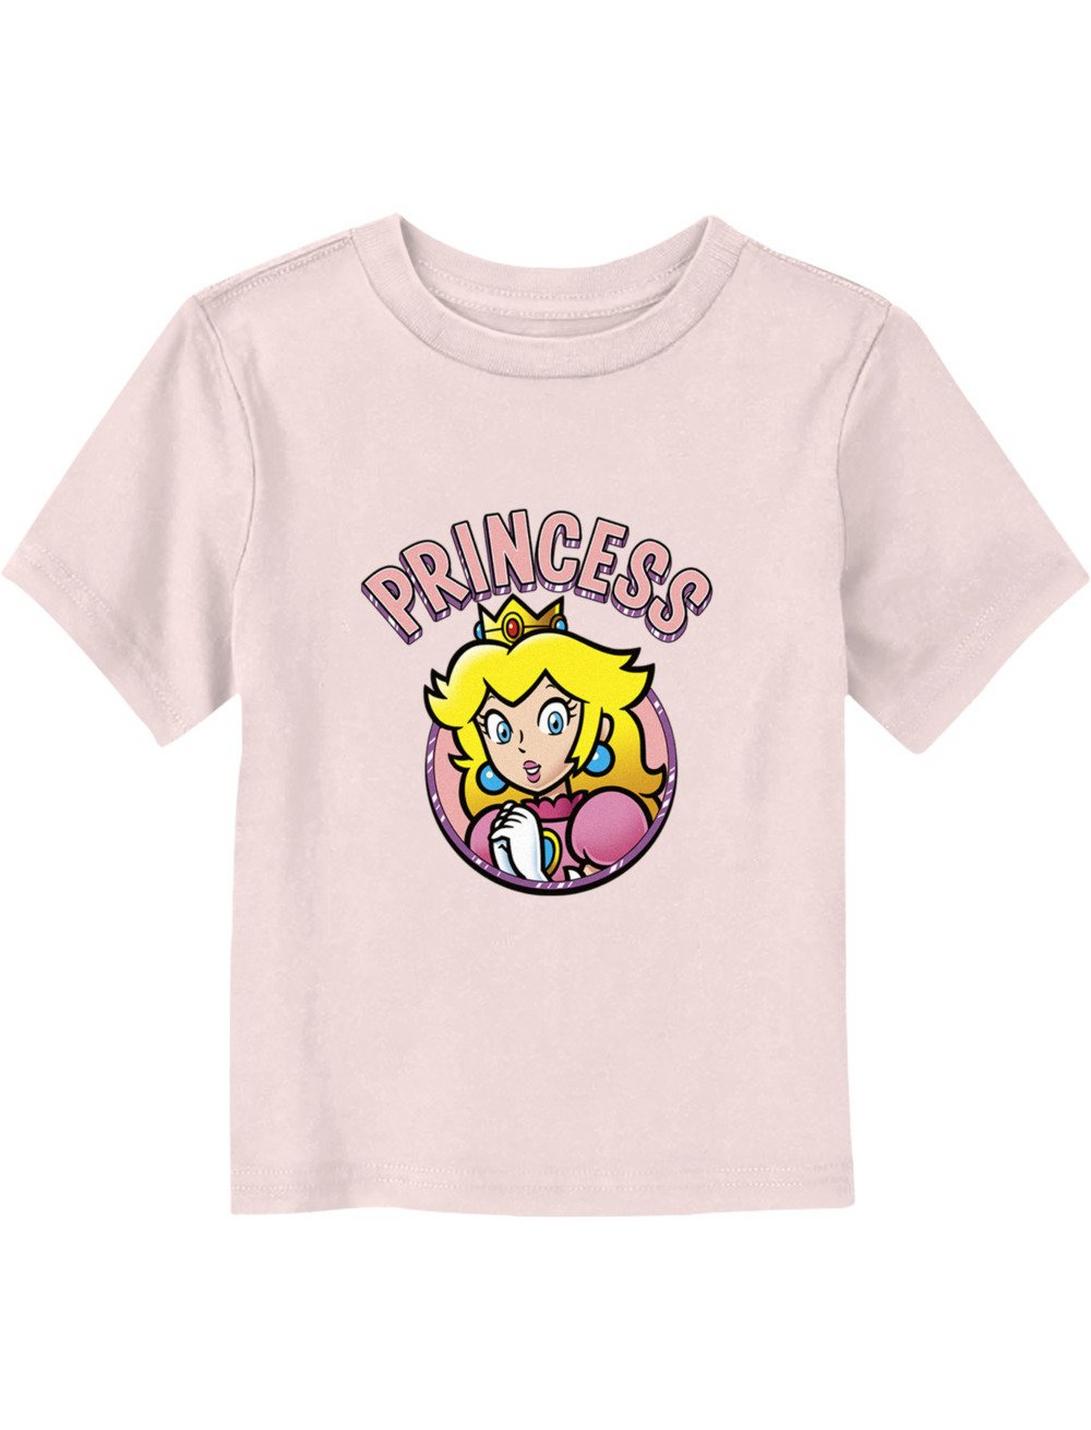 Super Mario Bros. Princess Peach Toddler T-Shirt, LIGHT PINK, hi-res